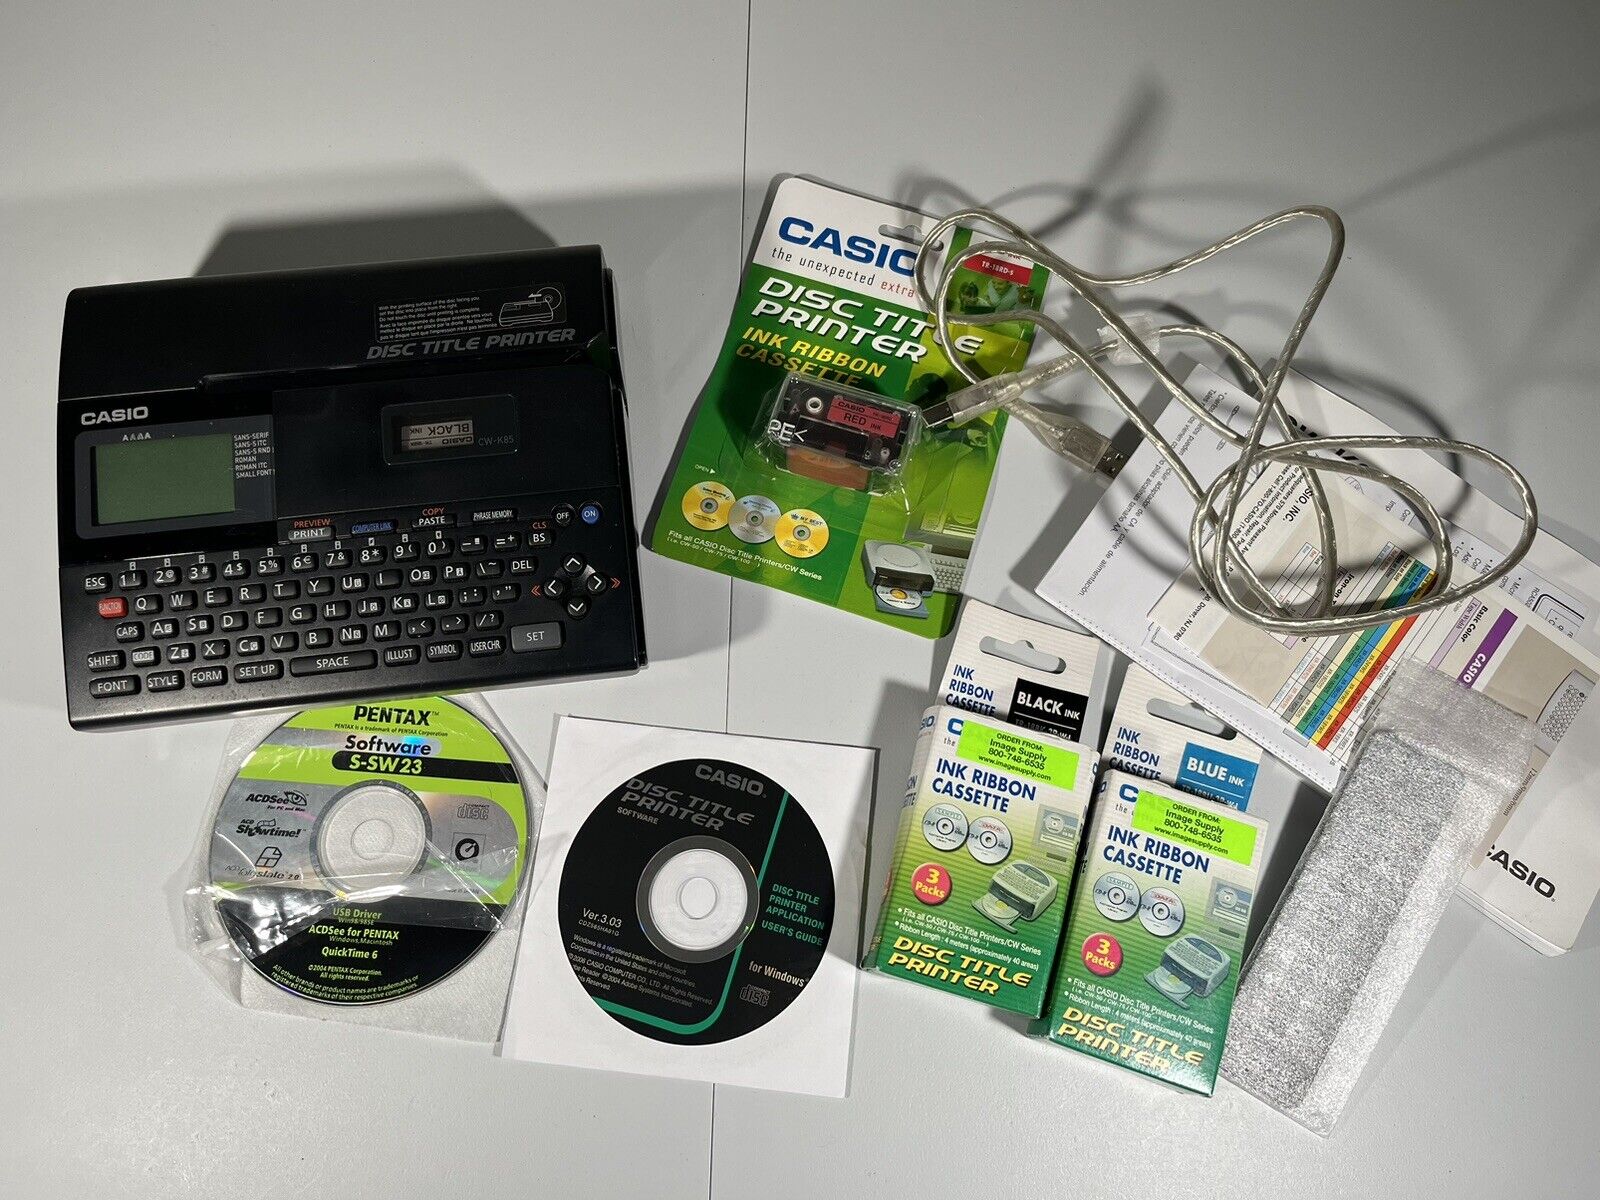 Casio Disc Title Printer CW-K85 CD Label Maker With Accessories READ DESC